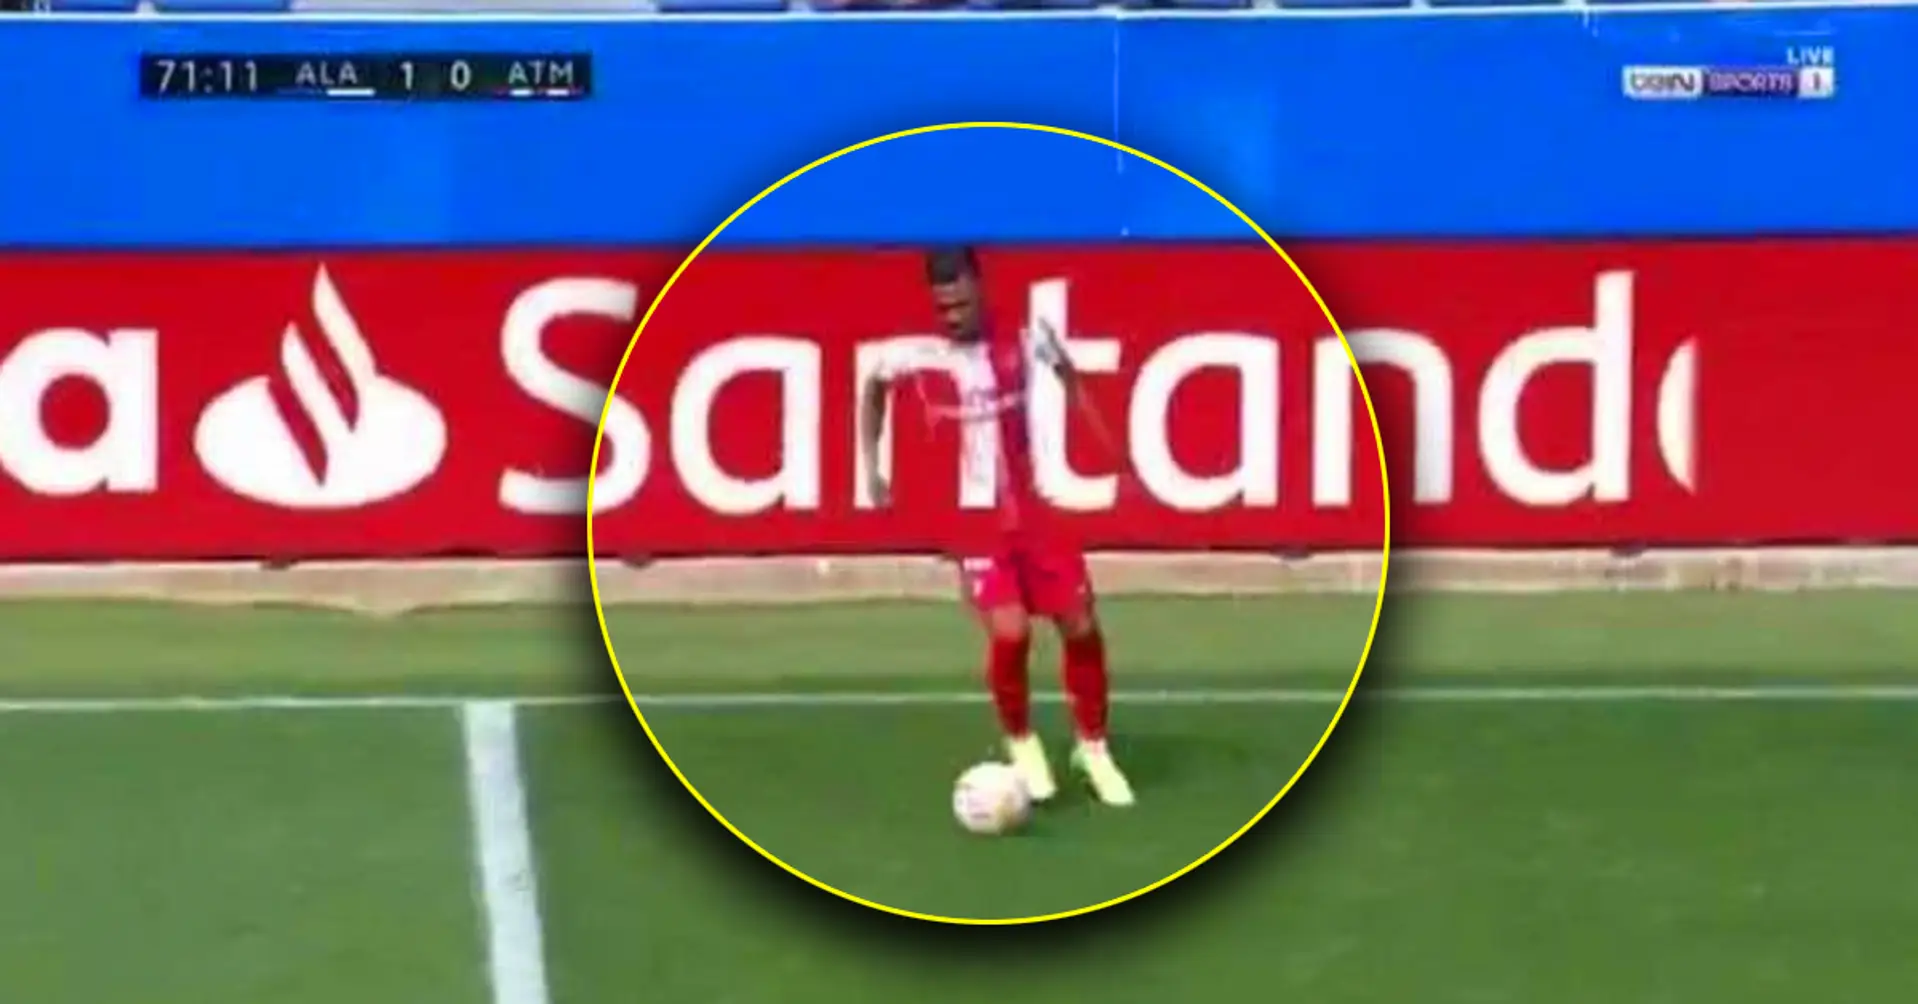 Magic Trick. Incredible optical illusion caught on camera during La Liga match